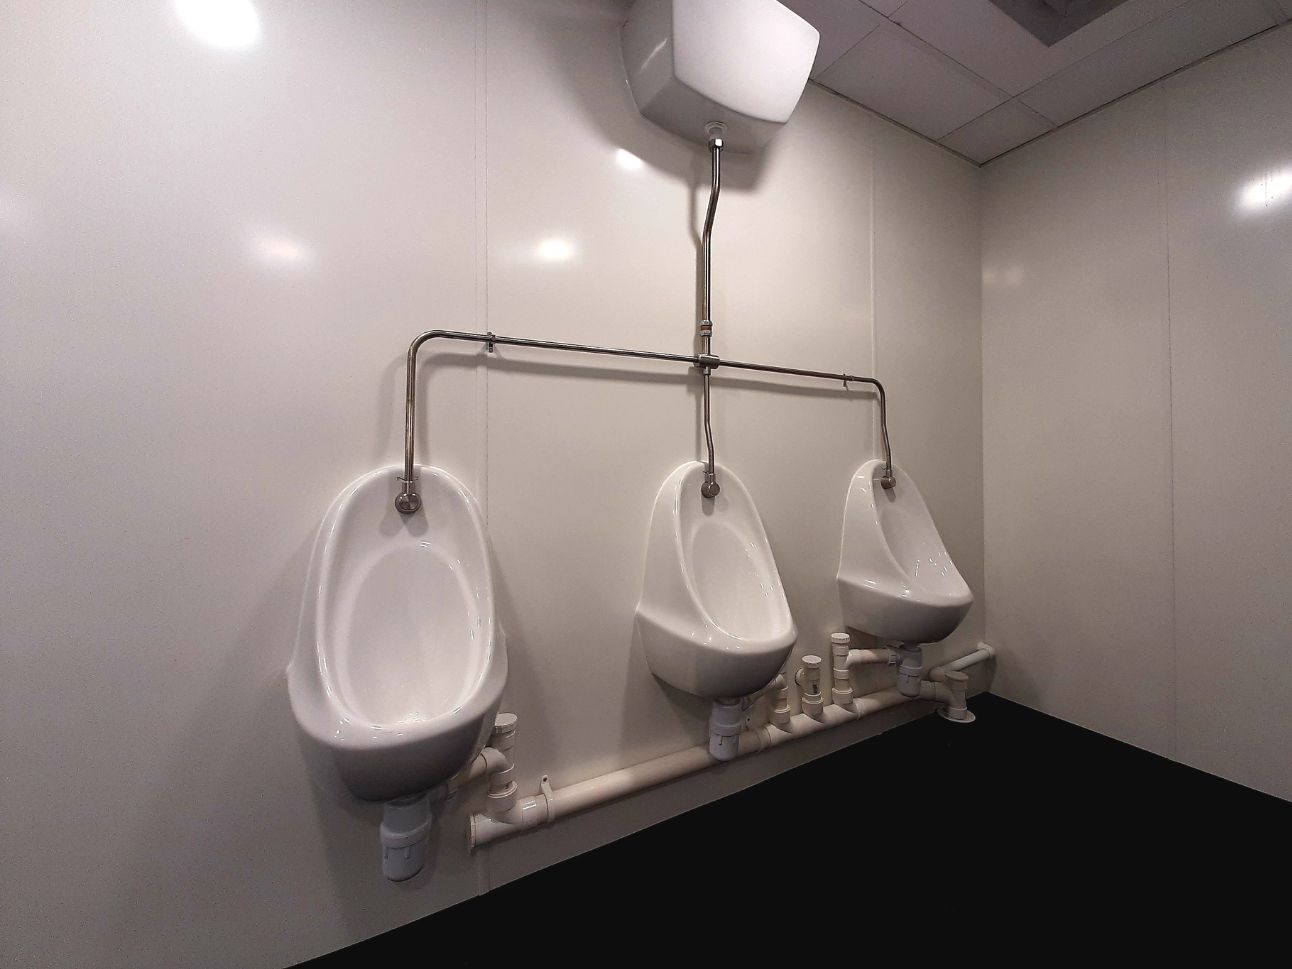 Exposed cistern urinal